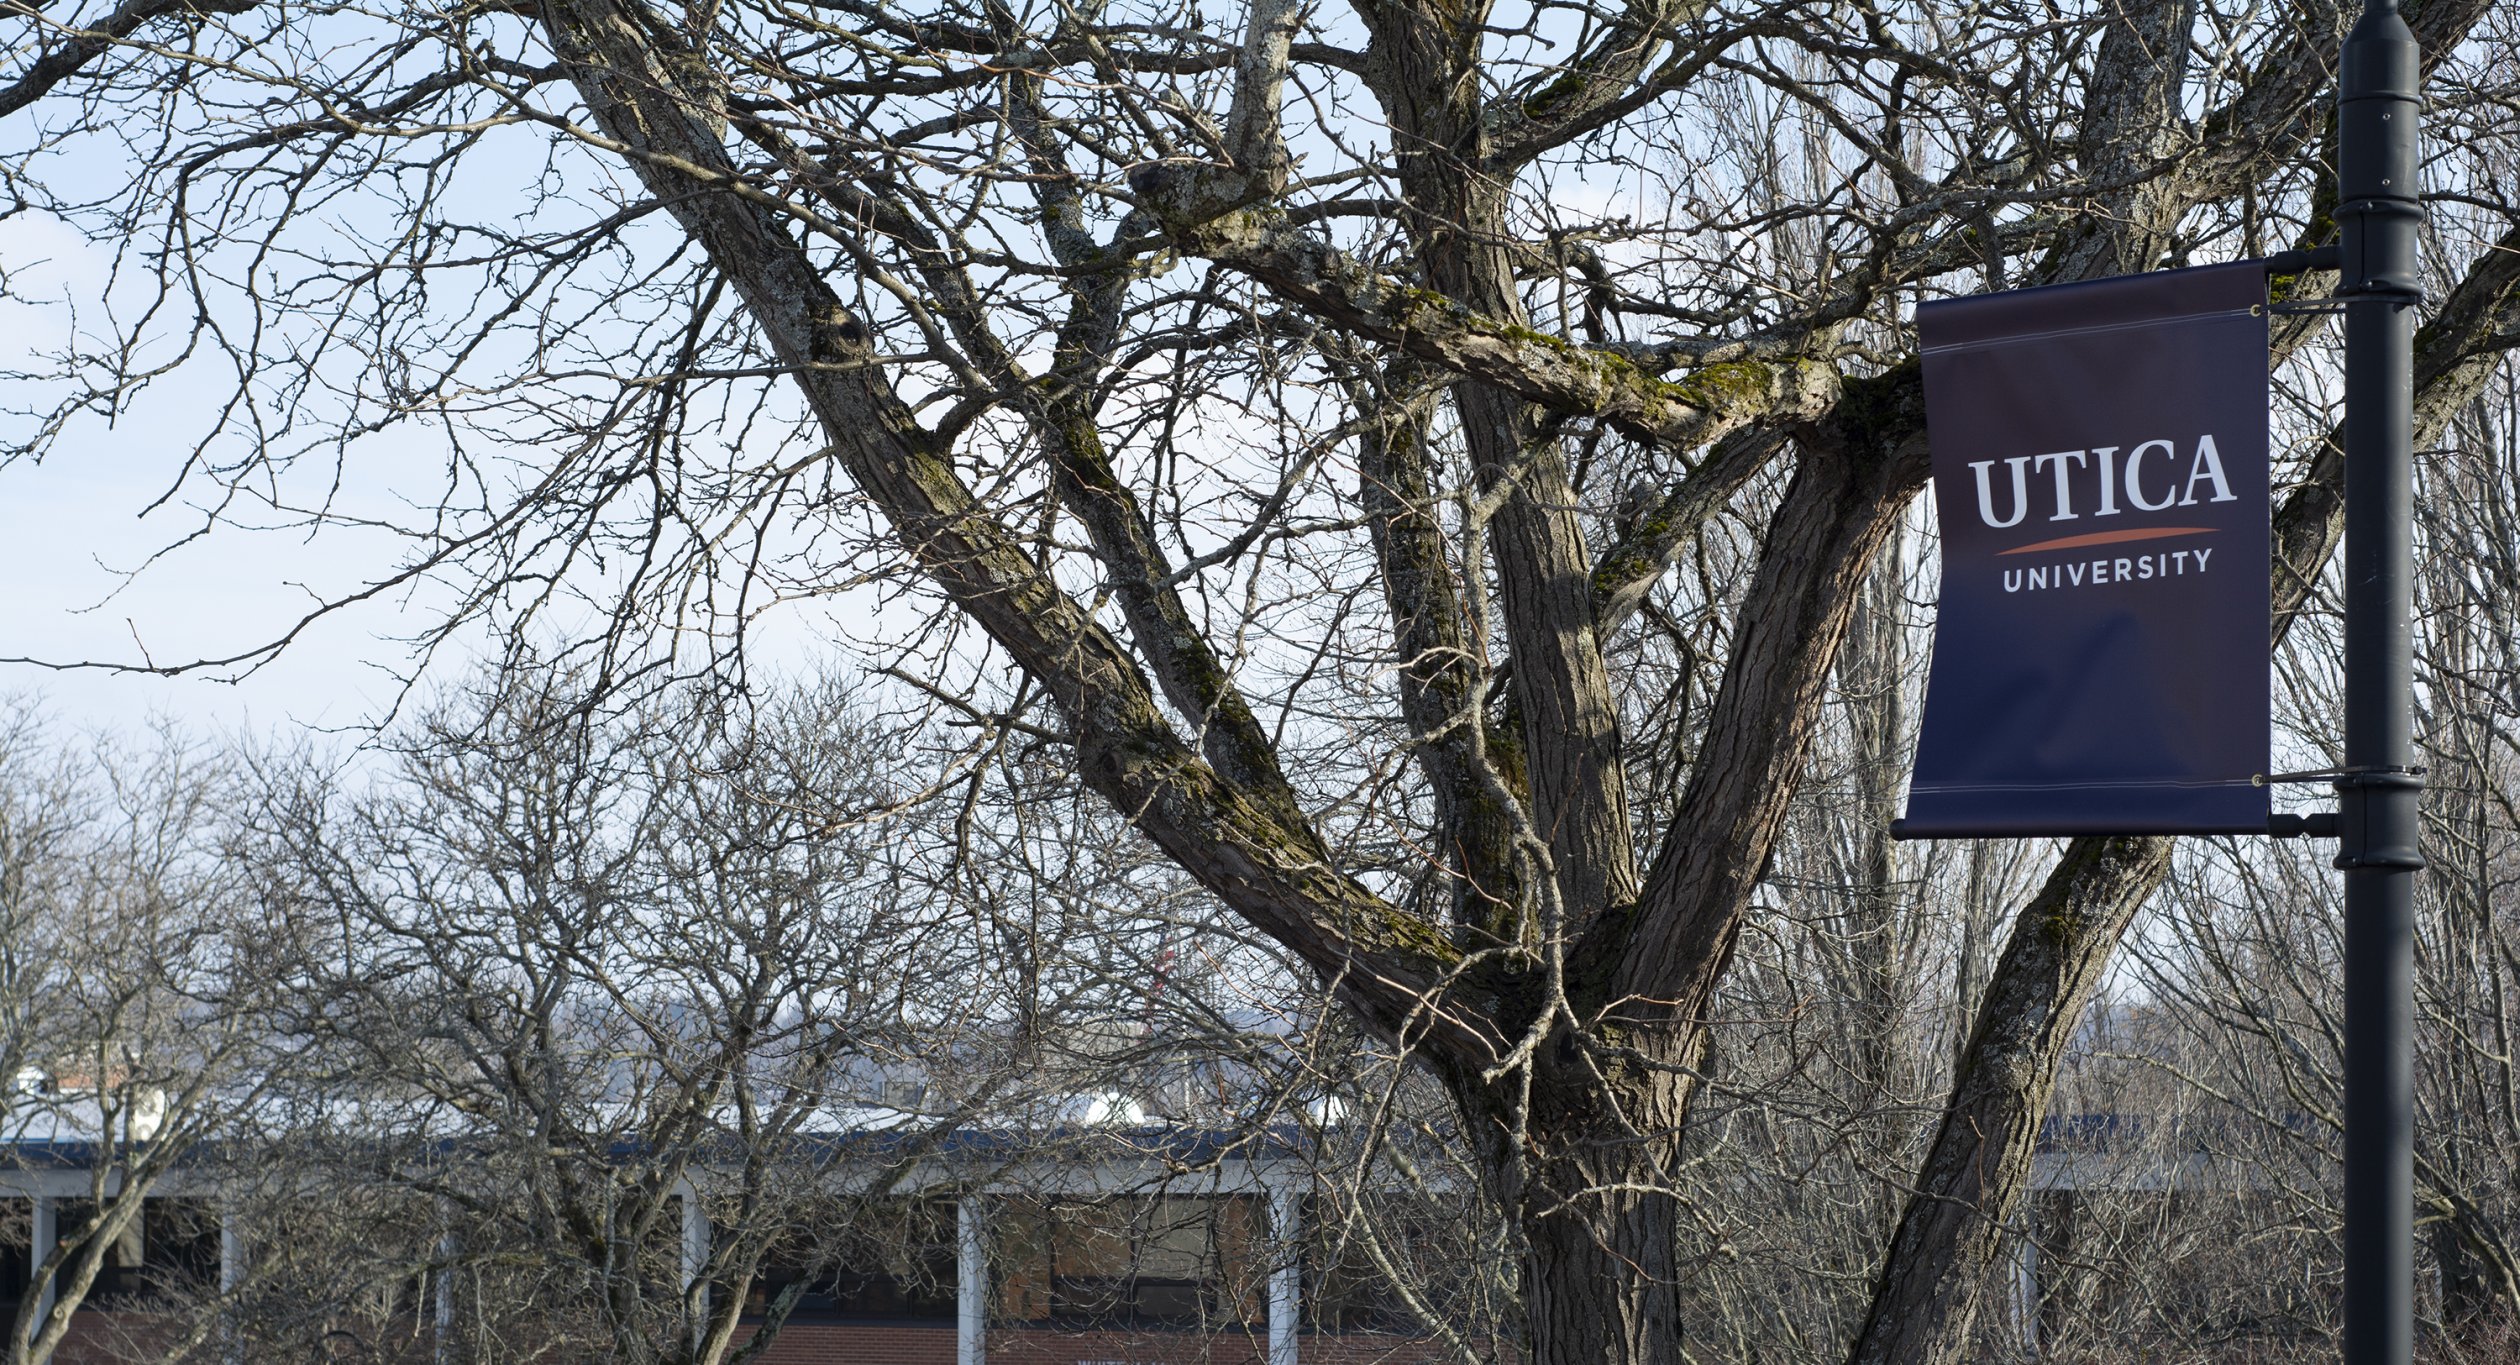 A blue Utica University banner overlooks the courtyard.